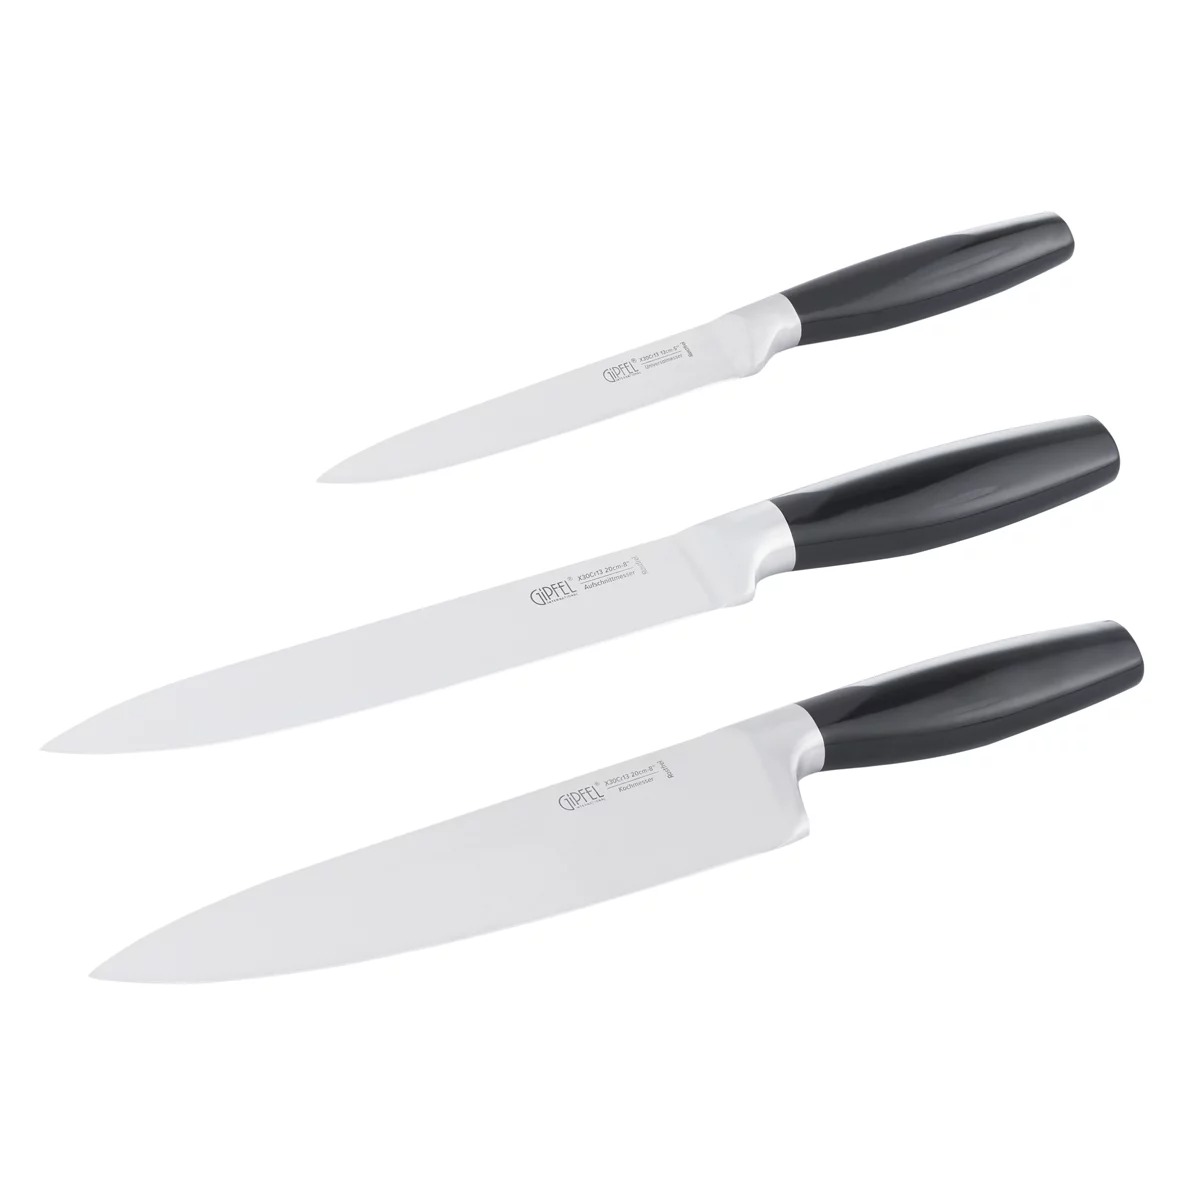 Набор Gipfel Zooma из 3-х кухонных ножей набор ножей gipfel 51086 3 предмета